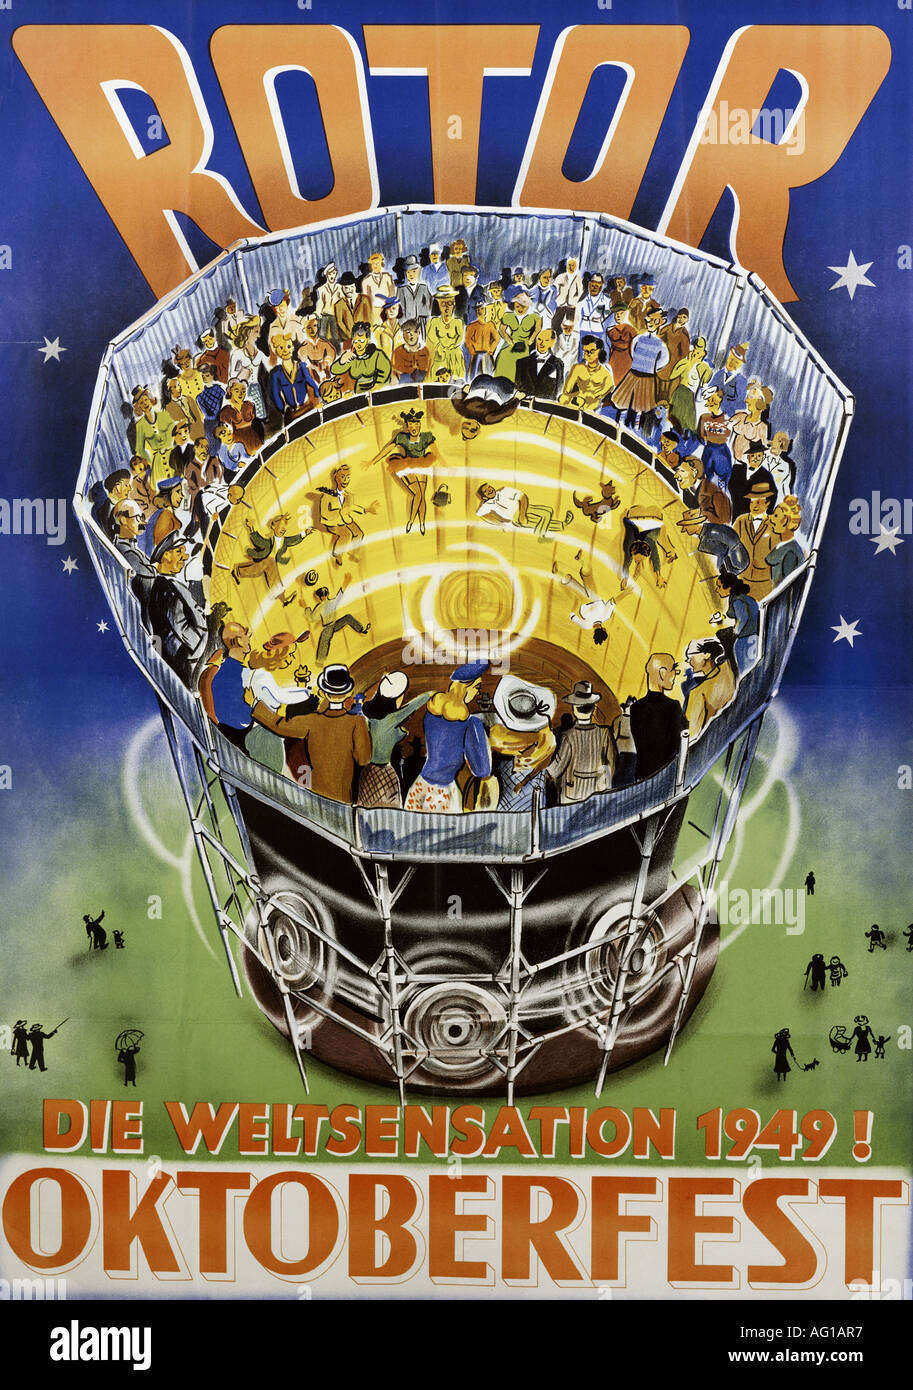 festivity, fairs, Oktoberfest, 'Rotor - Die Weltsensation 1949!', Munich, 1949, poster, advertising, , Stock Photo